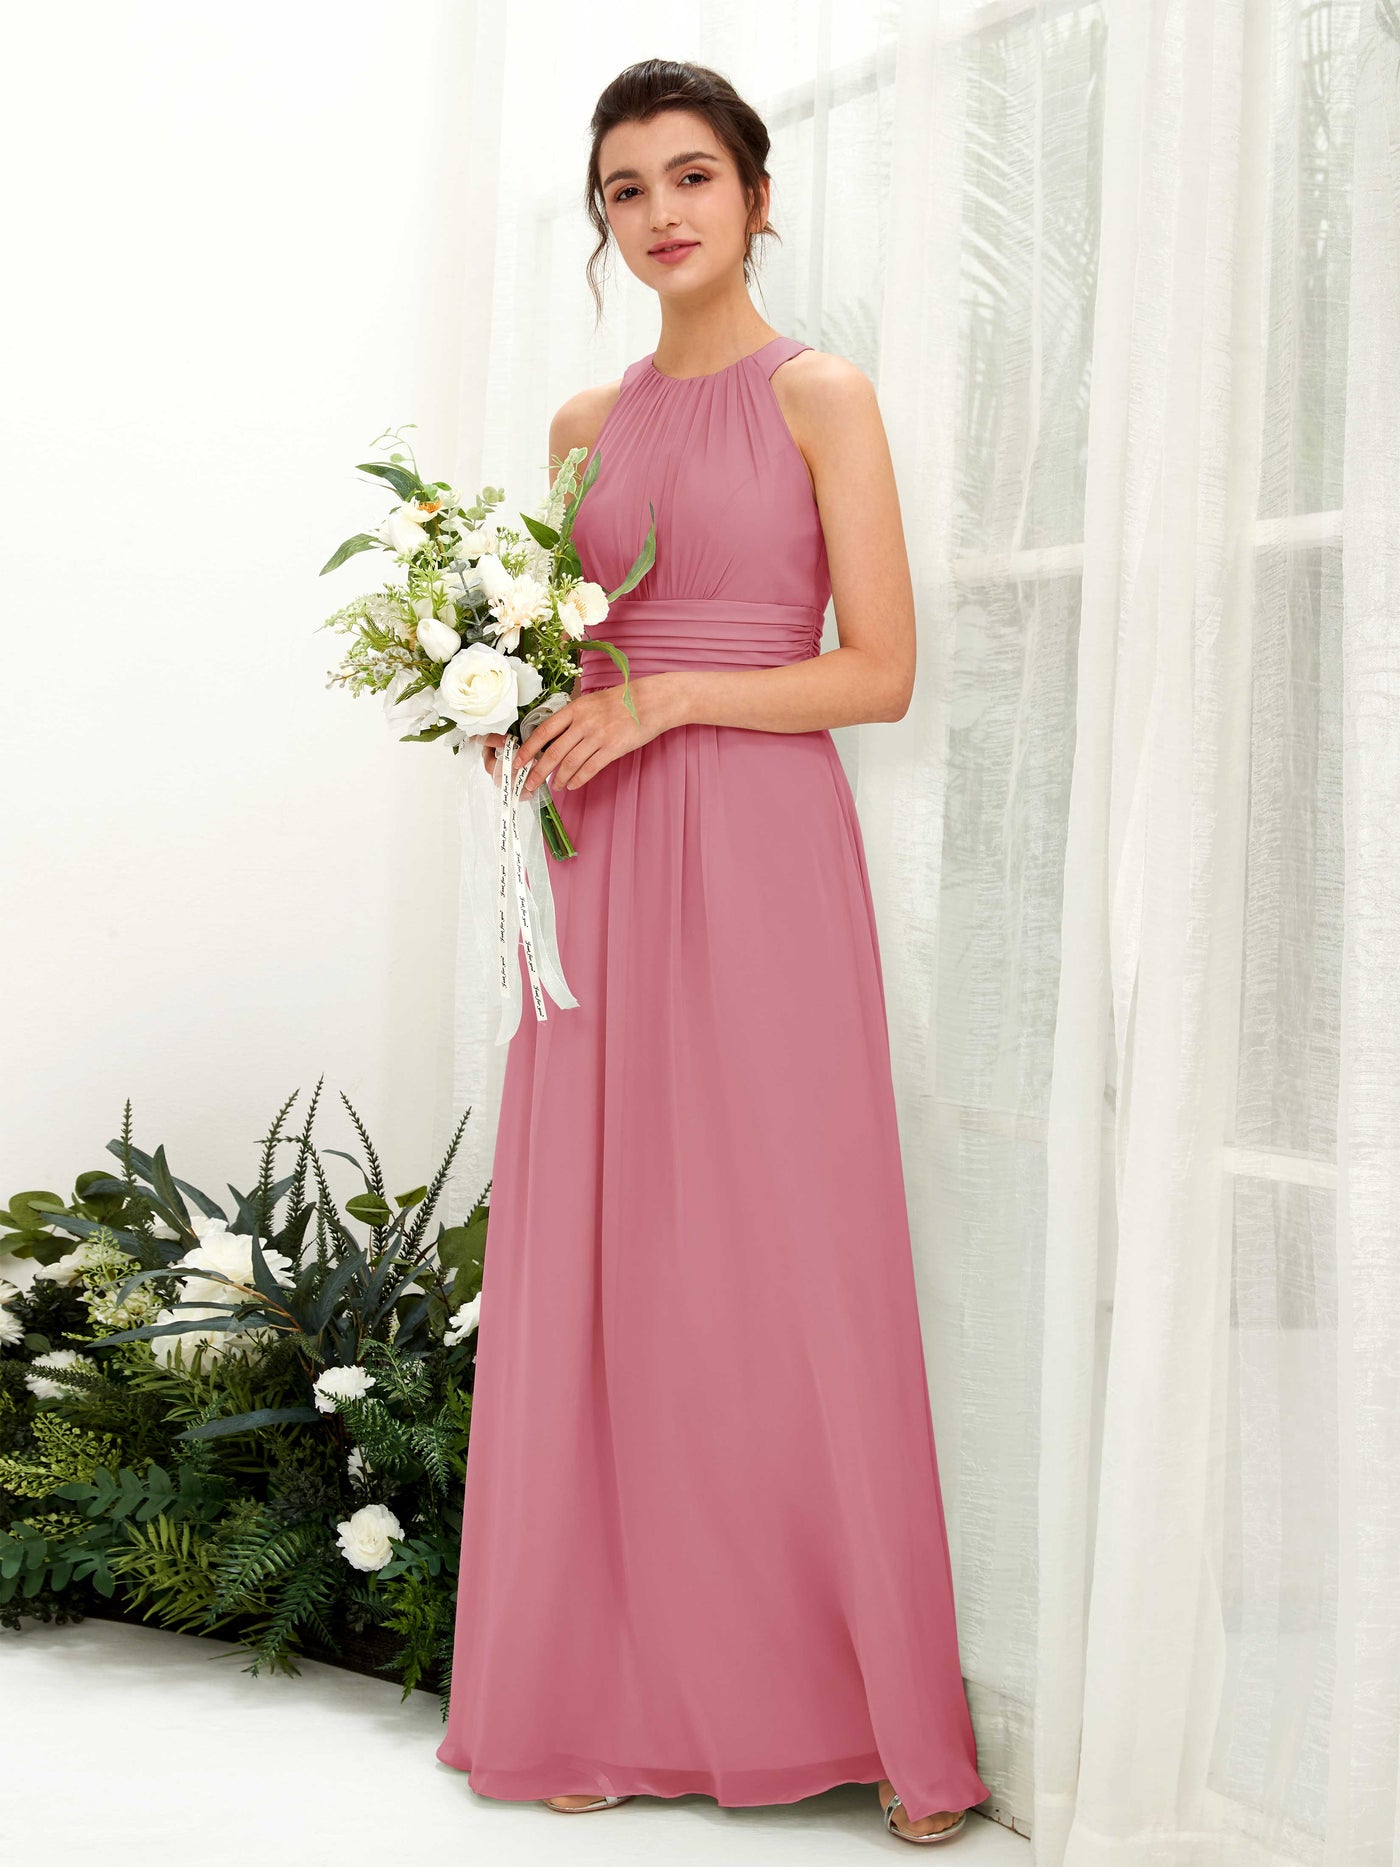 Desert Rose Bridesmaid Dresses Bridesmaid Dress A-line Chiffon Halter Full Length Sleeveless Wedding Party Dress (81221511)#color_desert-rose